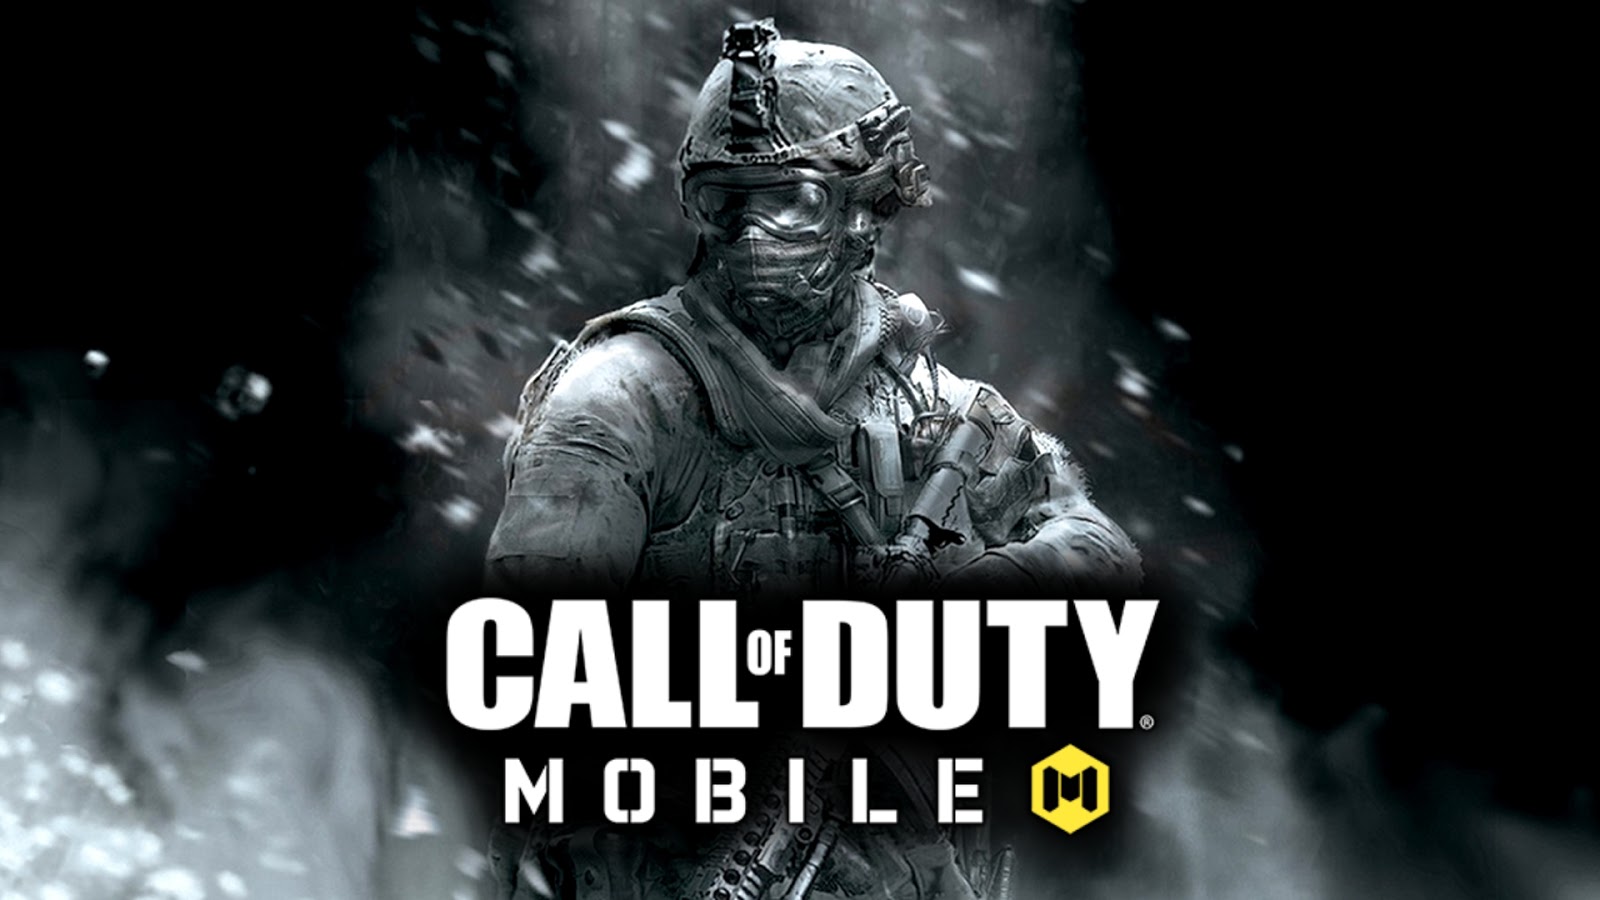 Cod mobile графика. Калов дьюти мобайл. Калл оф дьюти мобайл обложка. Call of Duty mobile обои. Call of Duty mobile мобайл.